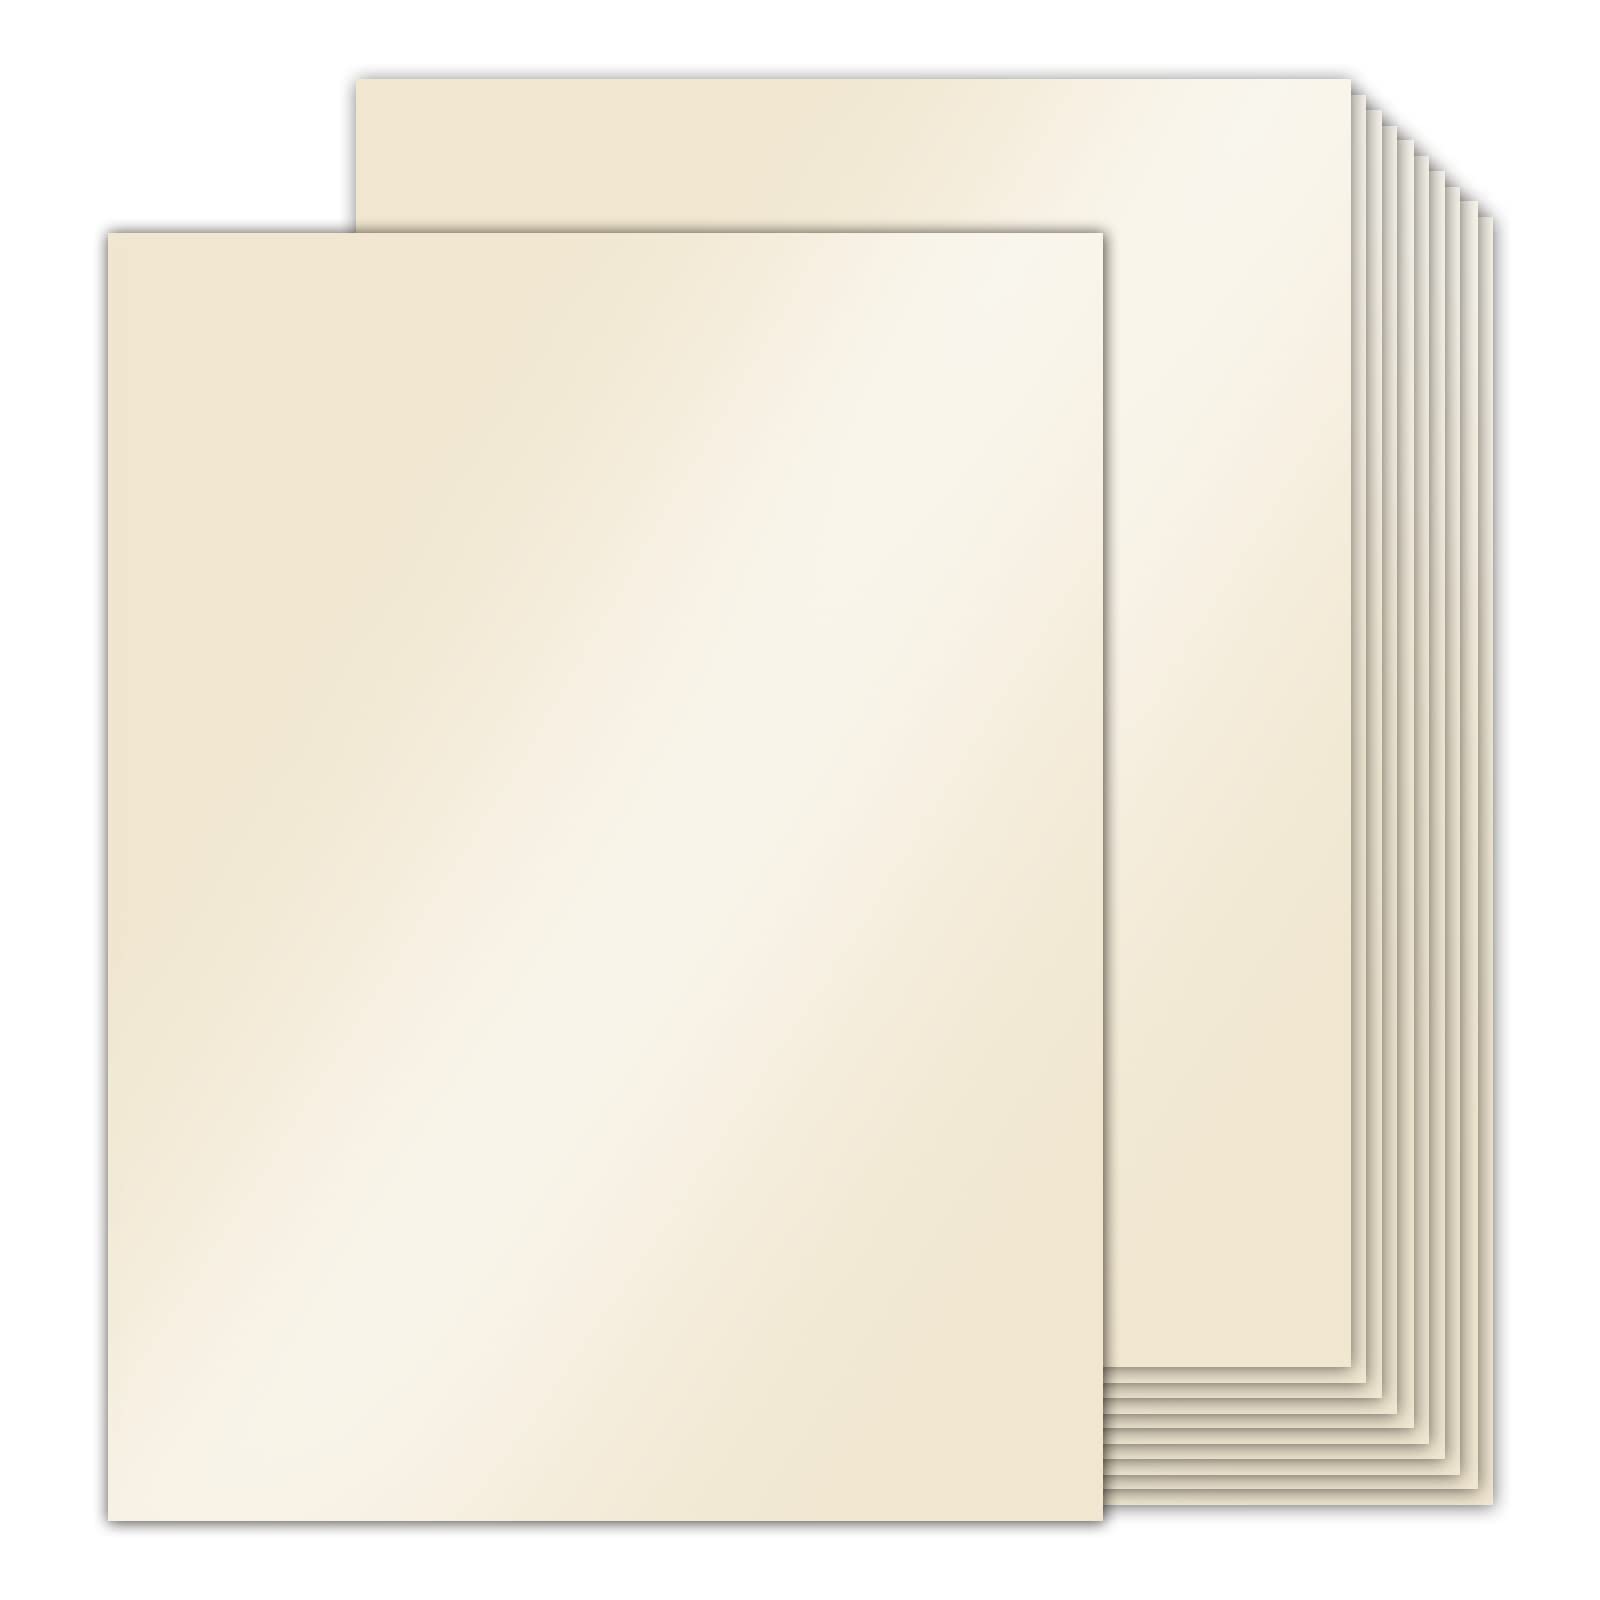  Gold Shimmer Paper - 100-Pack Metallic Cardstock